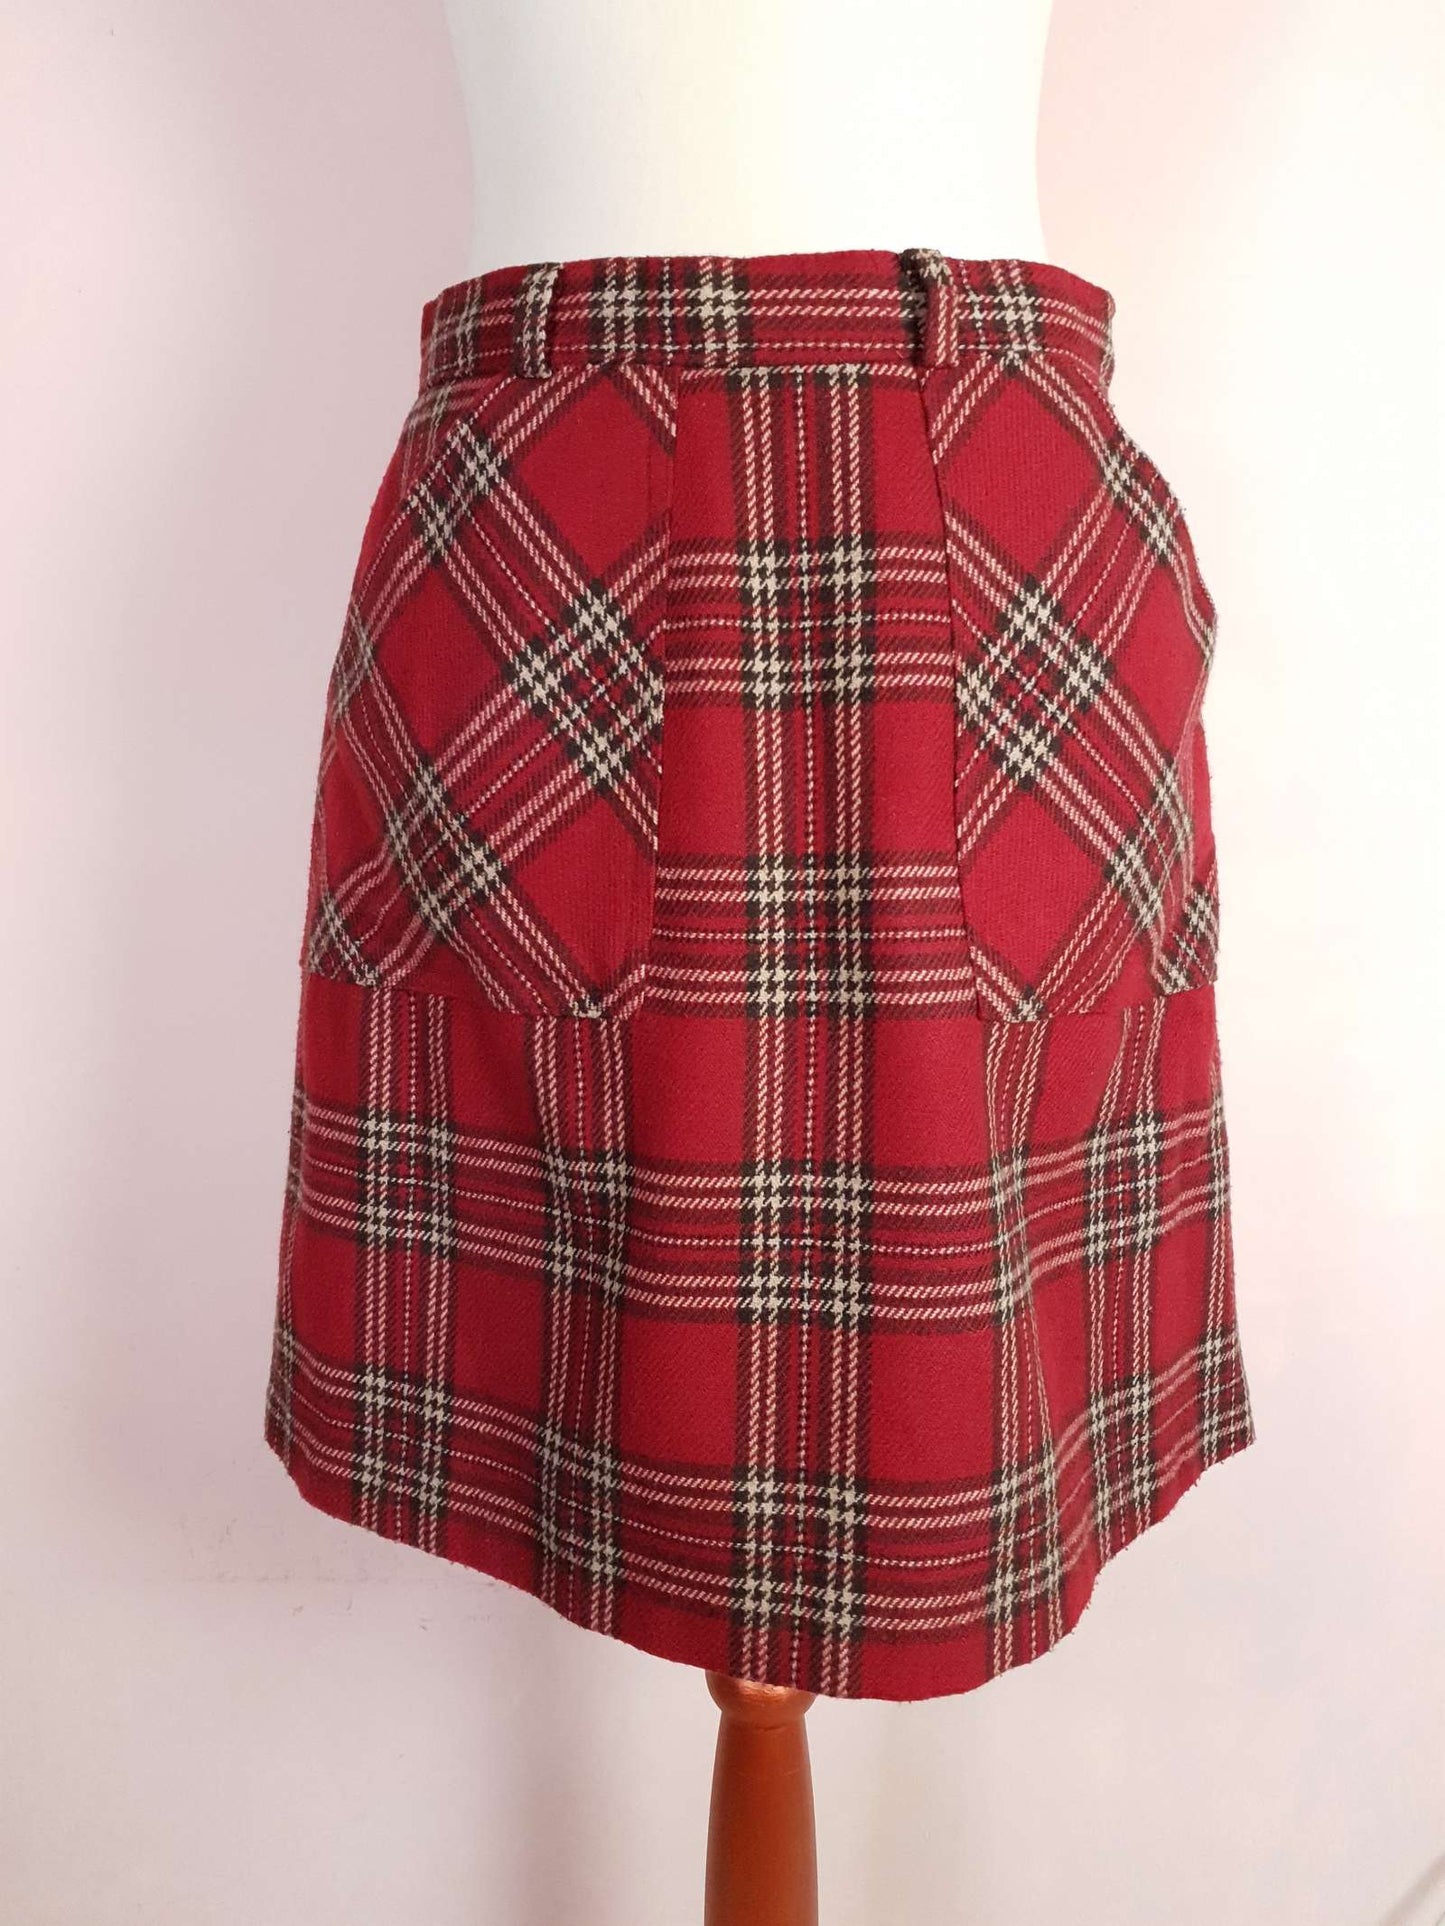 Cute Pre-Loved 1990s Red Tartan Plaid Skirt - Size 16